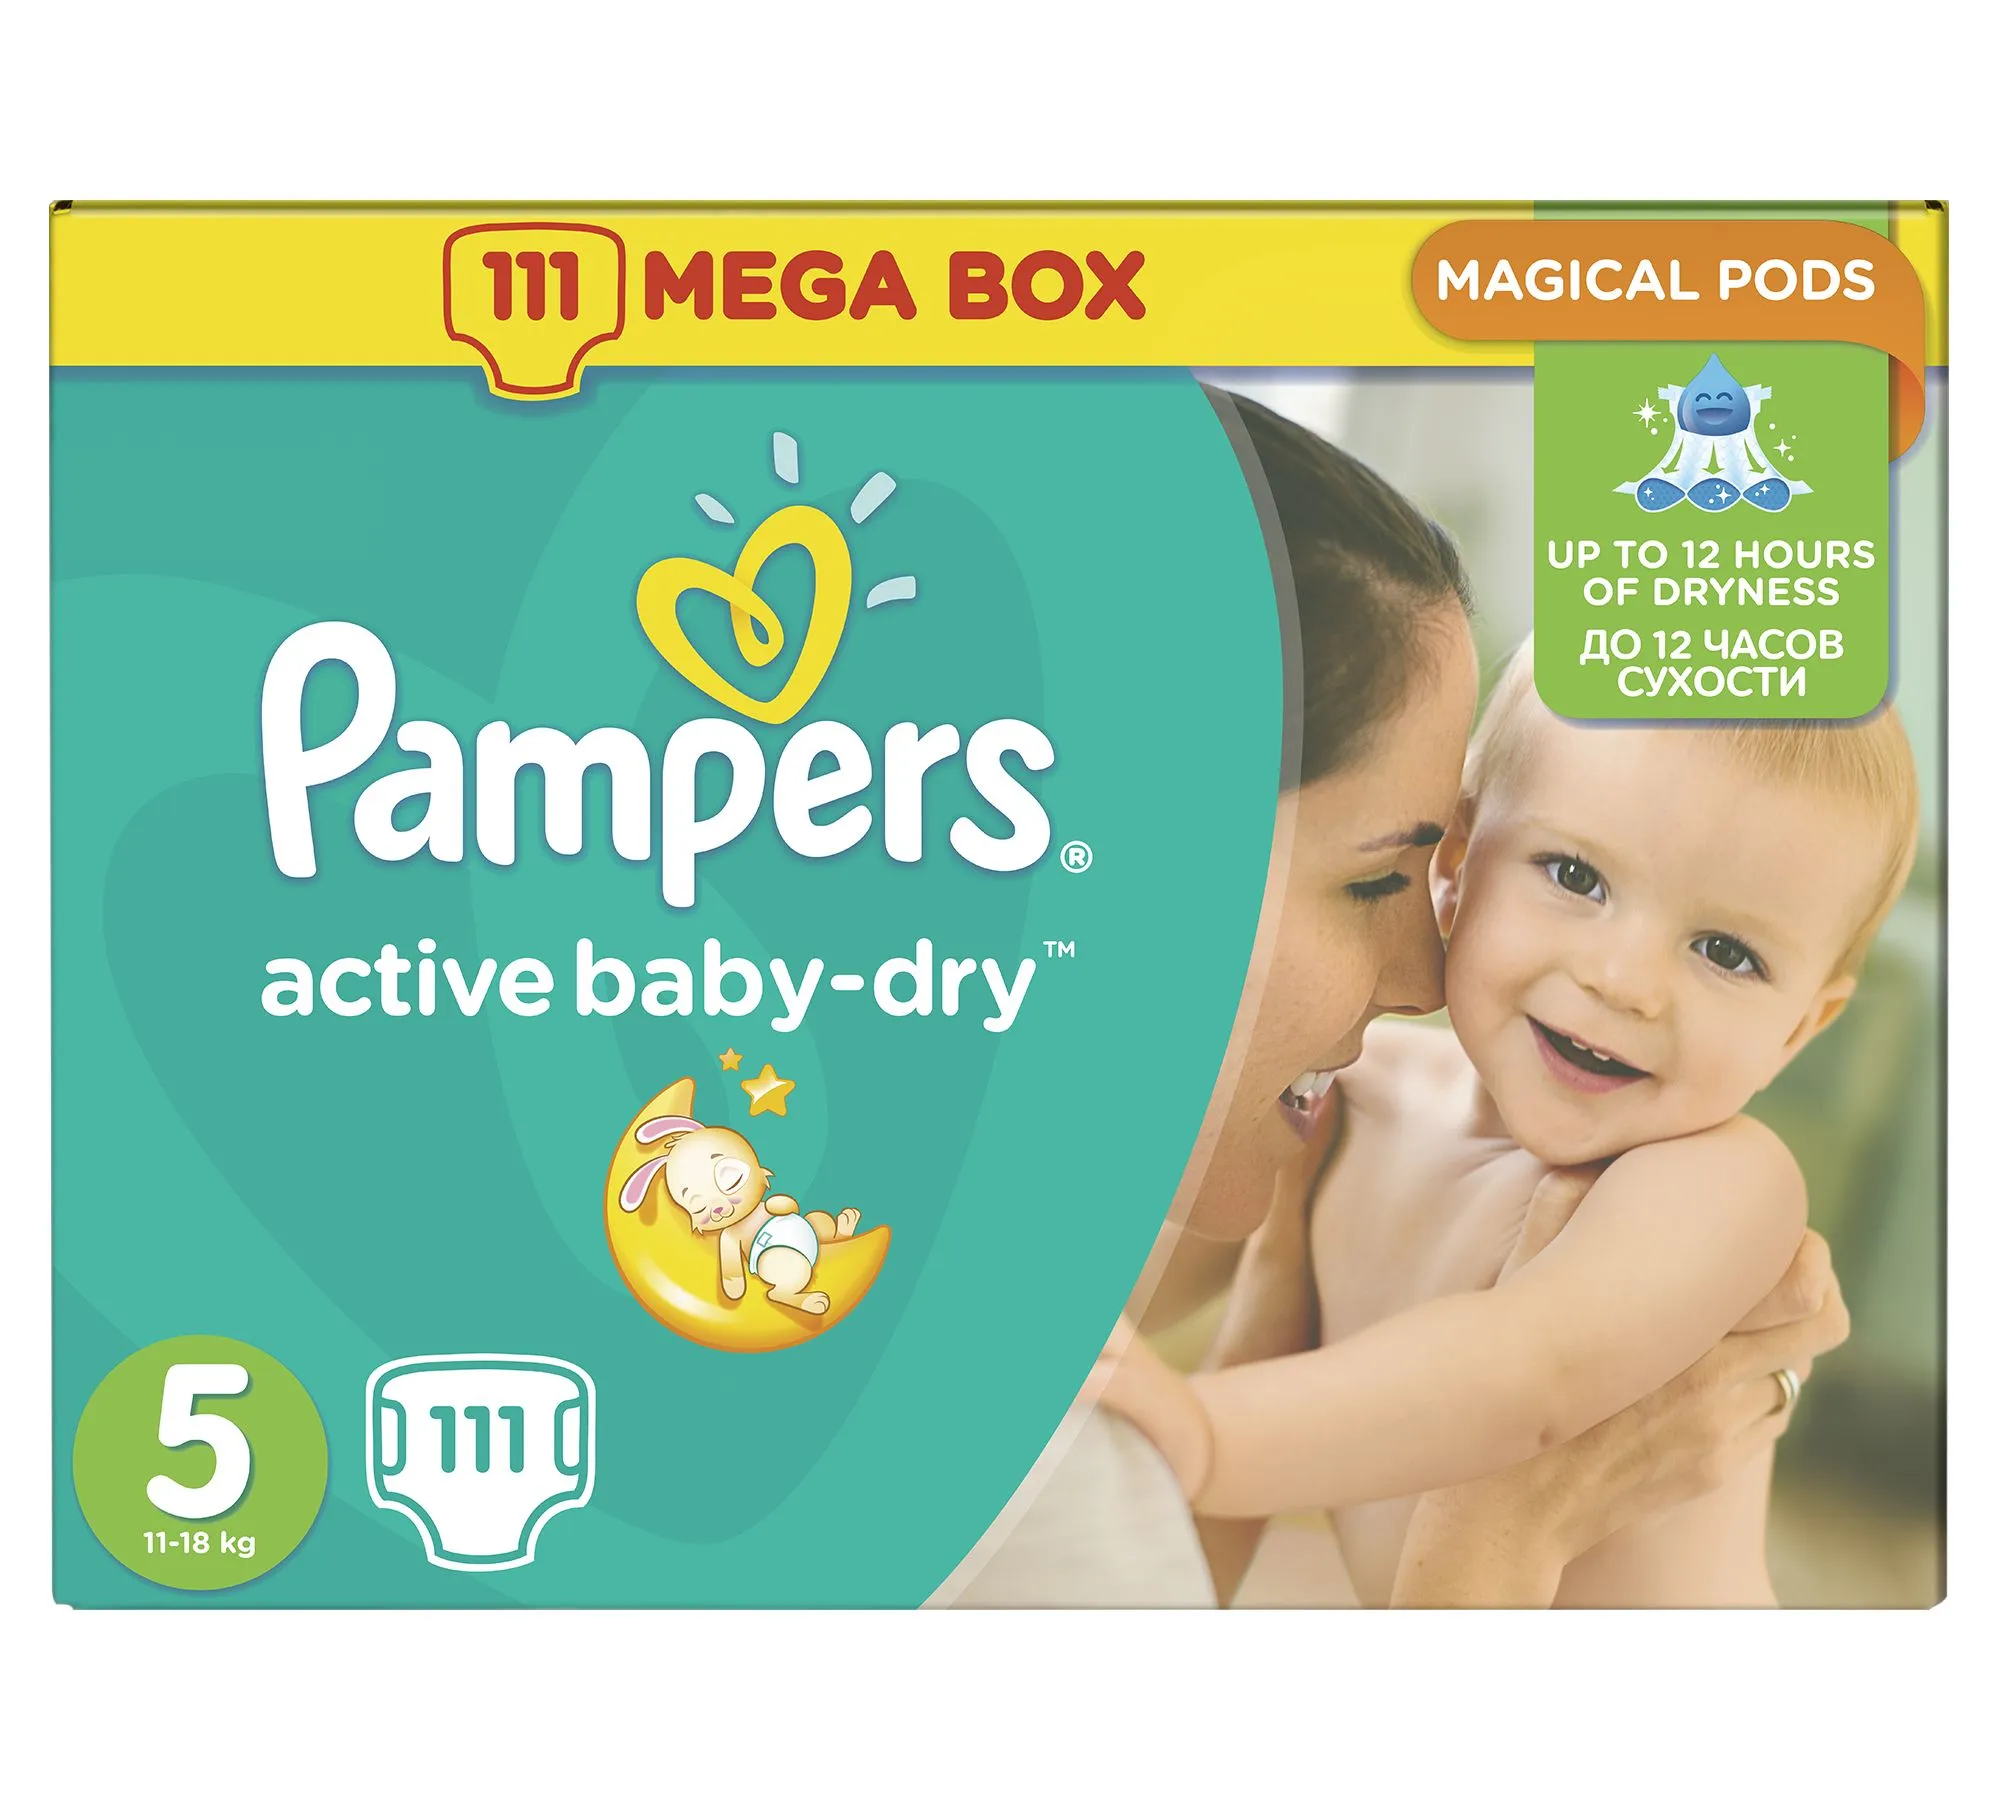 Pampers Active Baby-Dry dětské plenky velikost 5 Junior, 111ks